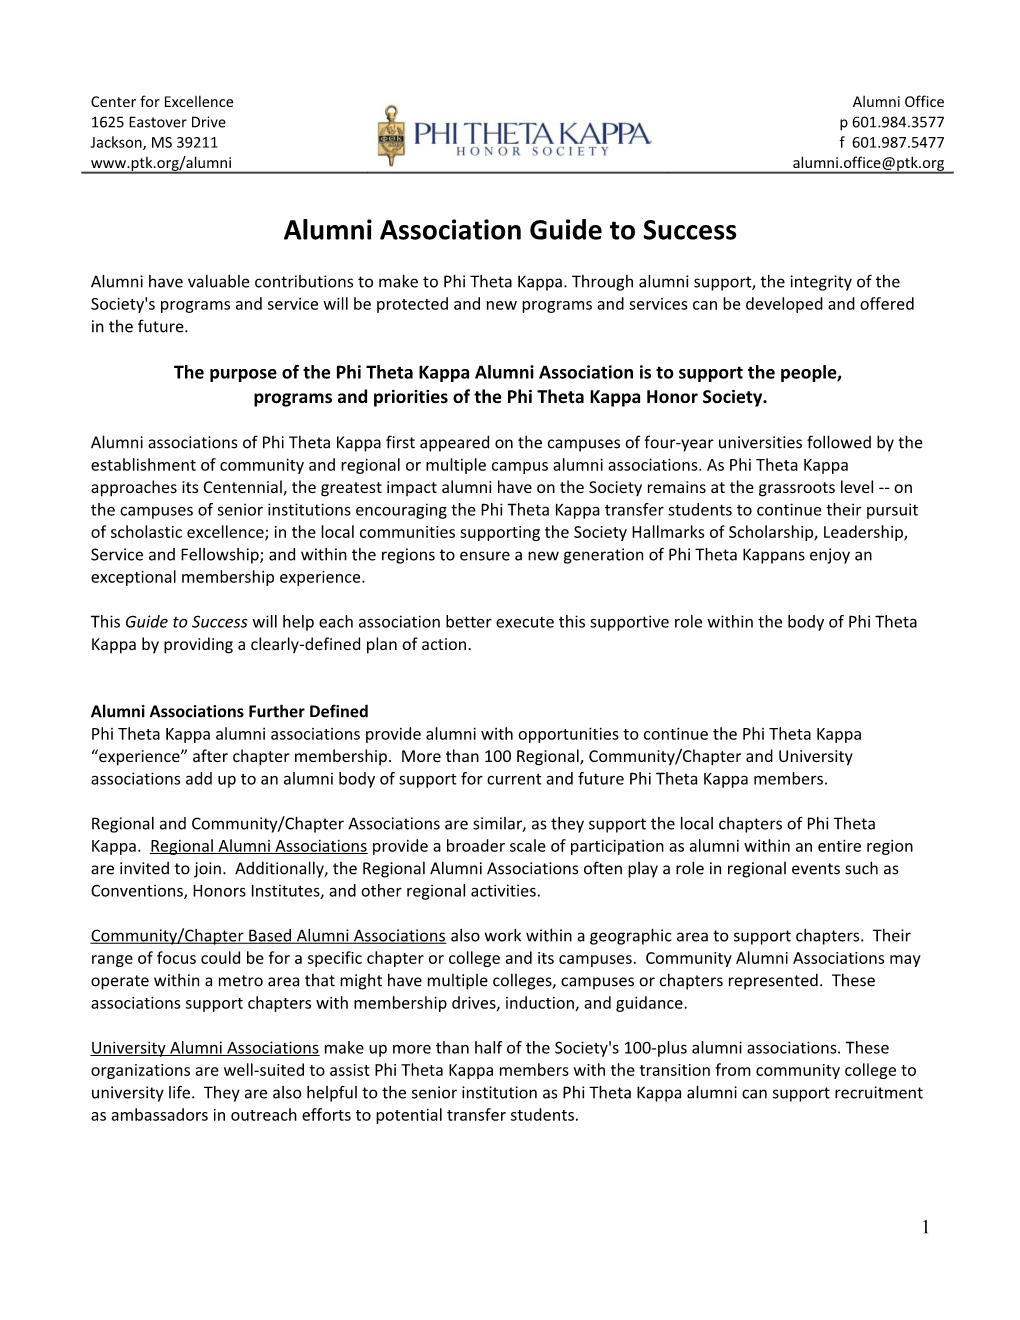 Alumni Association Guide to Success